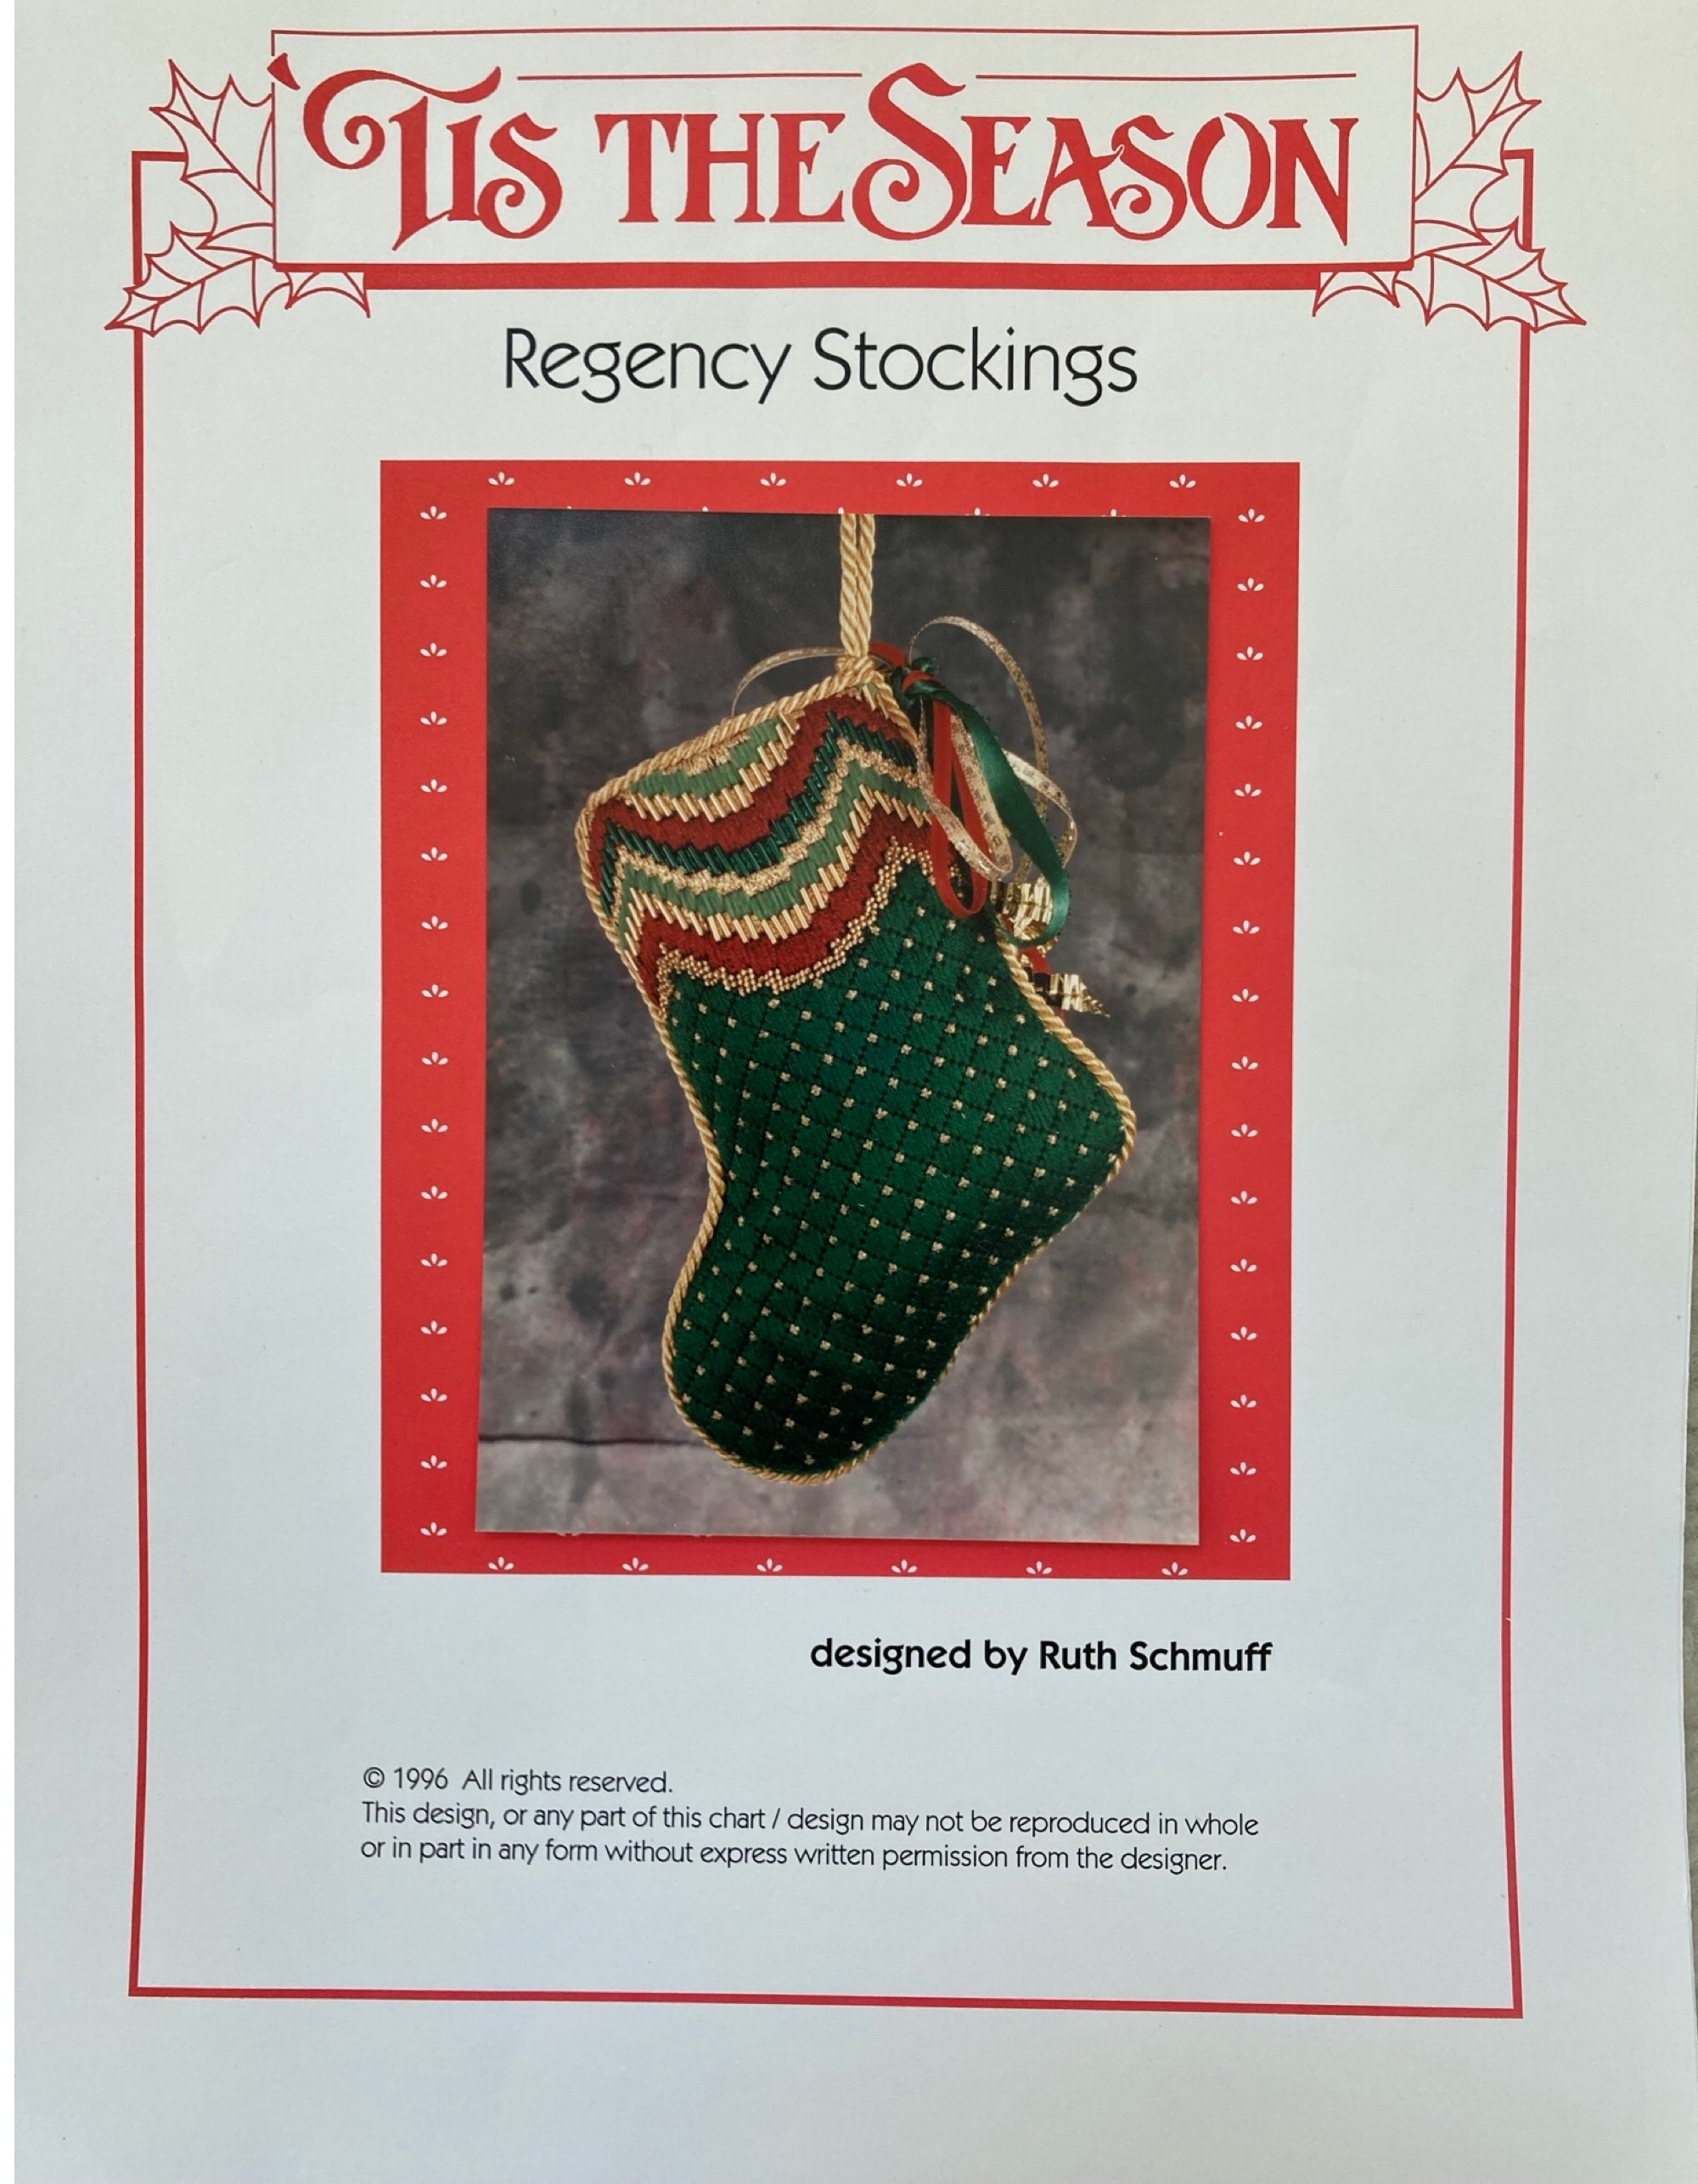 Regency Stockings